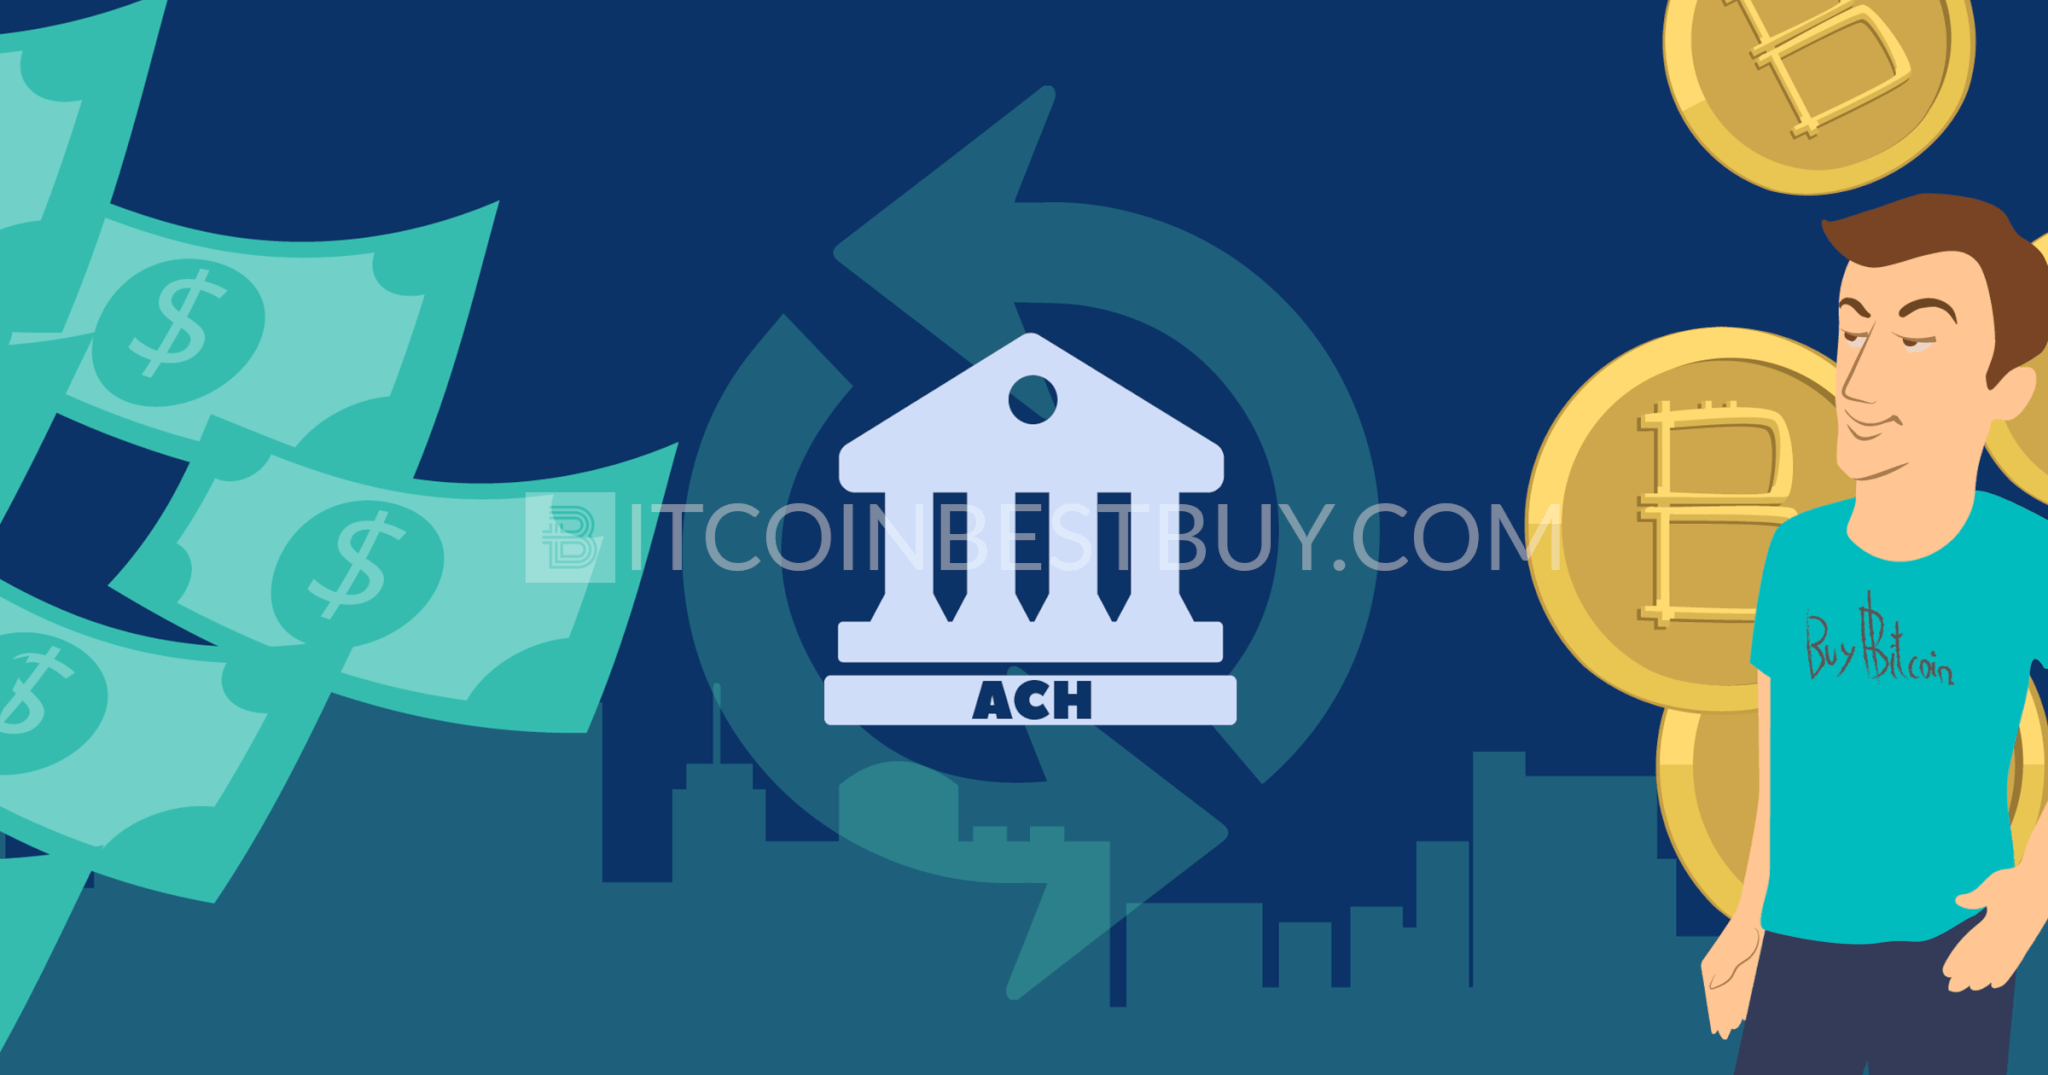 ach purchase bitcoins